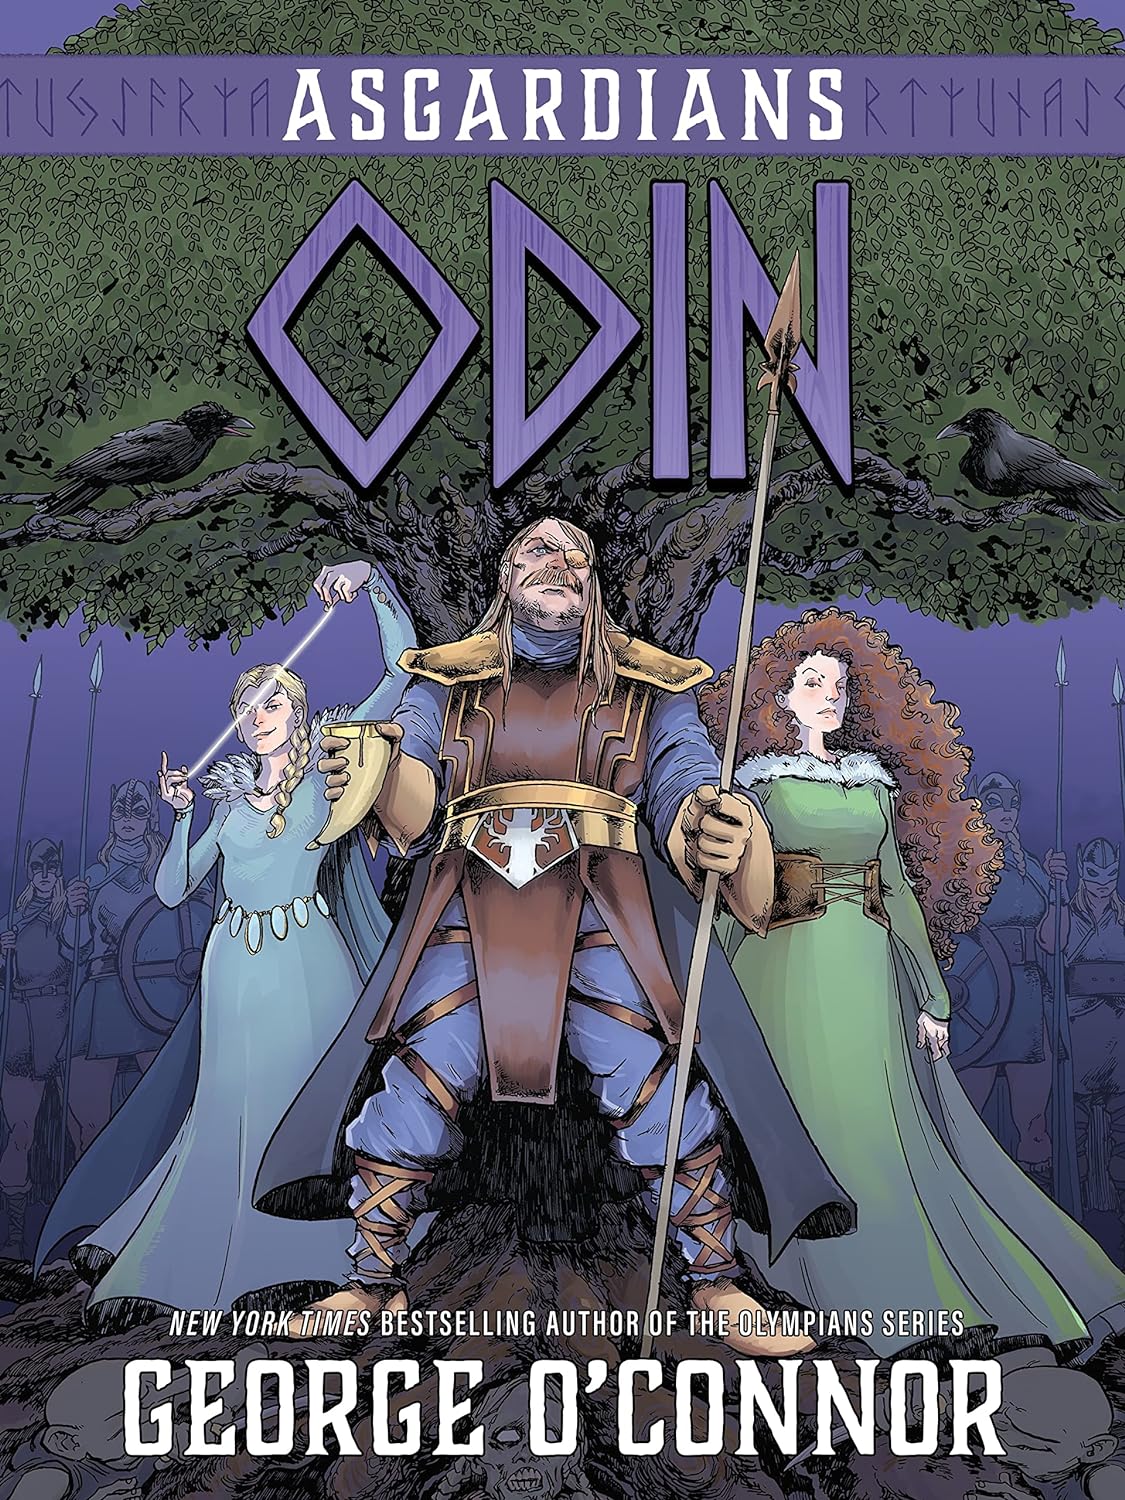 Asgardians: Odin | This Week’s Comics